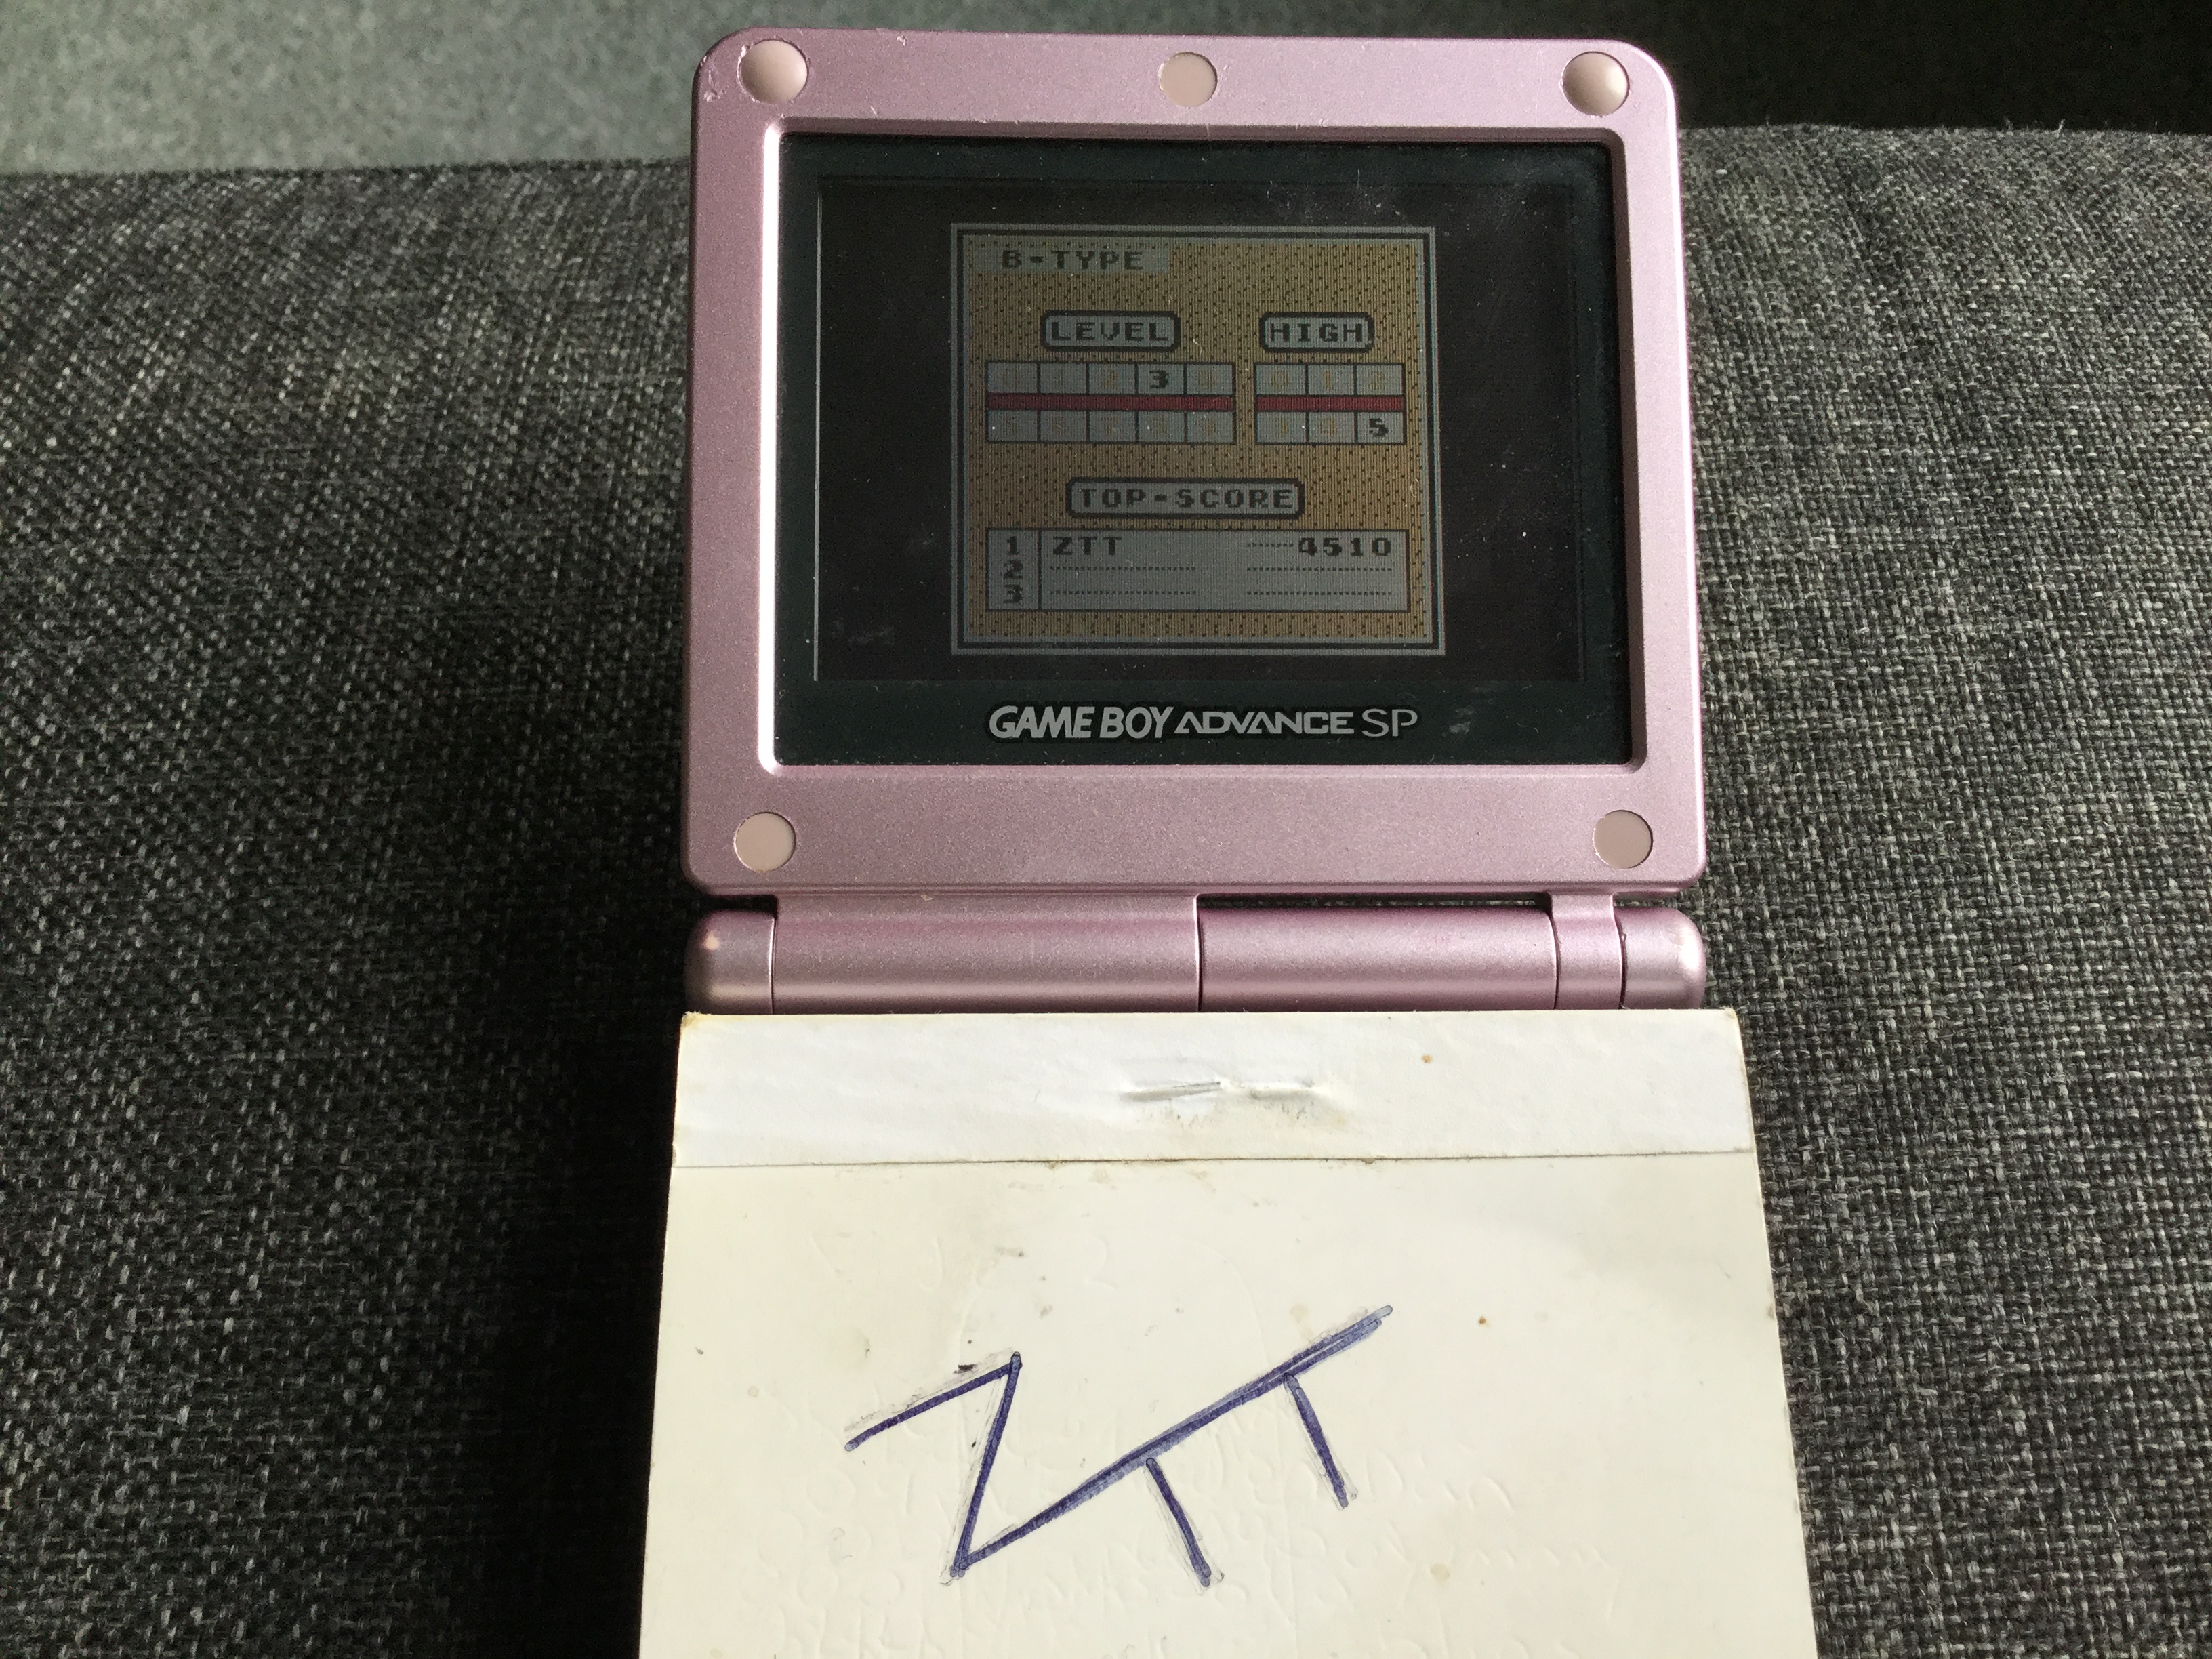 Frankie: Tetris: Type B [Level 3 / High 5] (Game Boy) 4,510 points on 2019-12-01 02:32:31